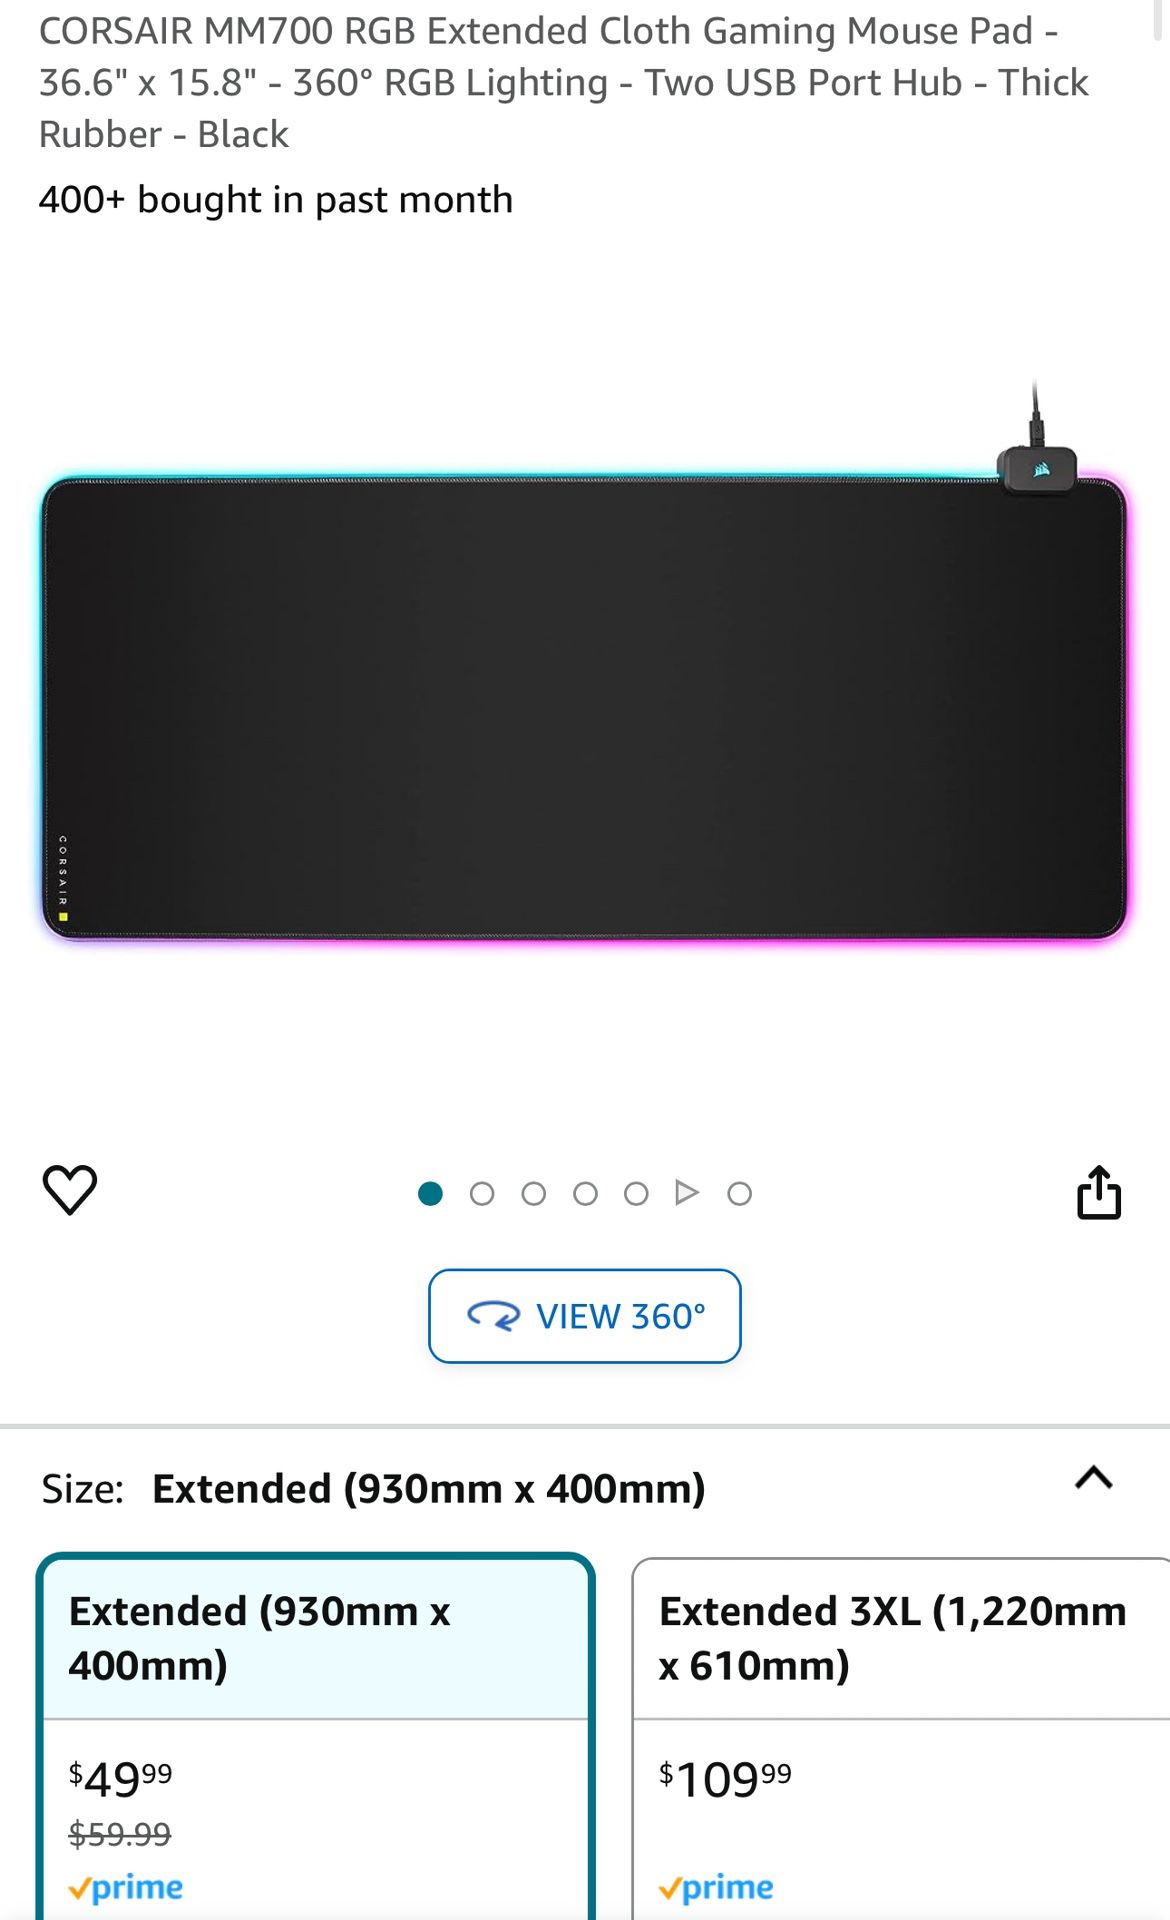 CORSAIR MM700 RGB Extended Cloth Gaming Mouse Pad - 36.6" x 15.8" - 360° RGB Lighting - Two USB Port Hub - Thick Rubber - Black